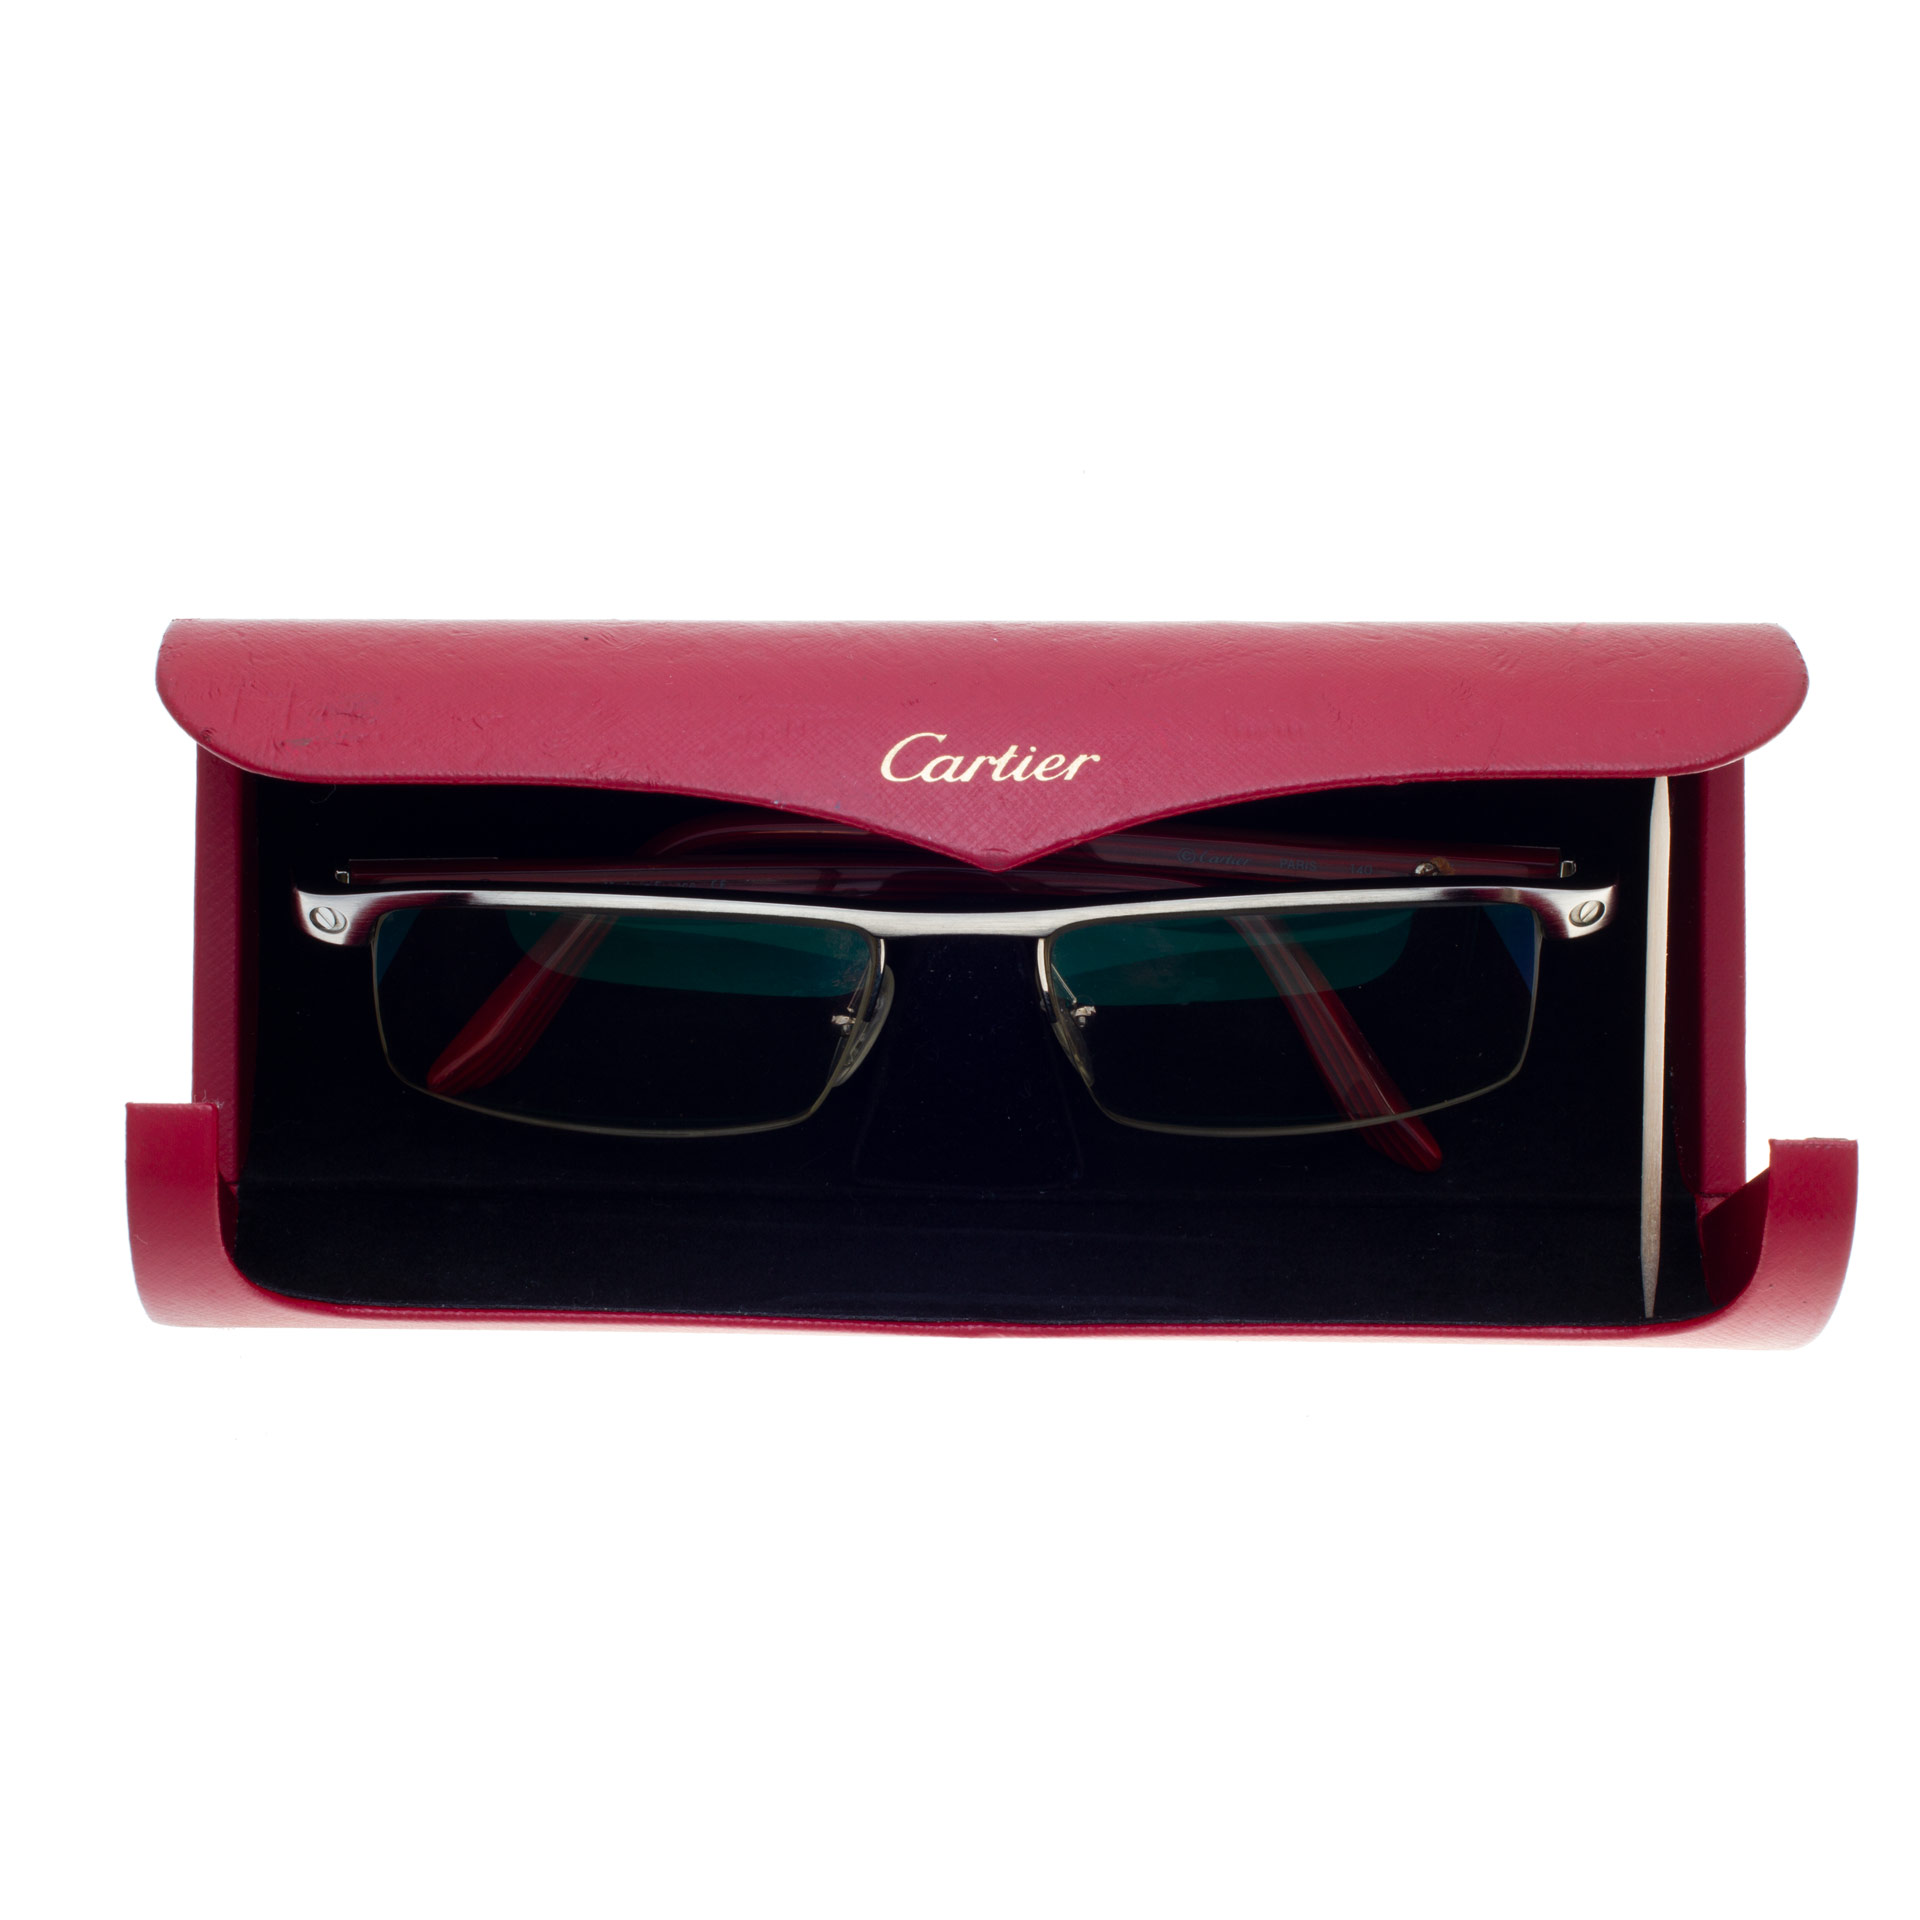 Cartier steel frame with wood stem glasses image 3